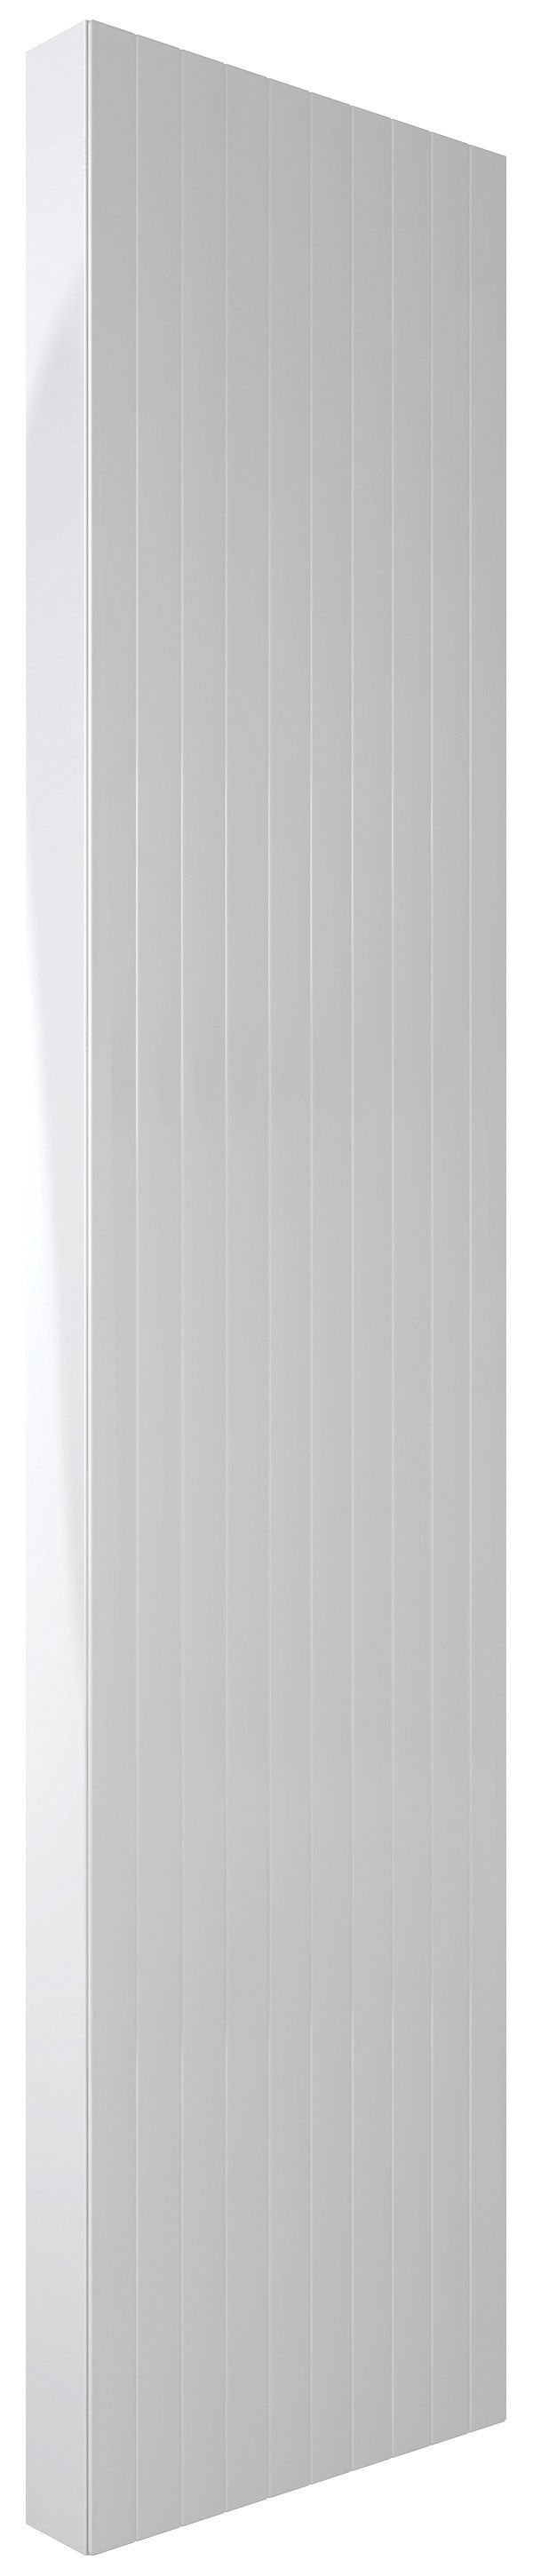 Image of Henrad Alto Double Convector Vertical Designer Radiator - White 1600 x 500 mm